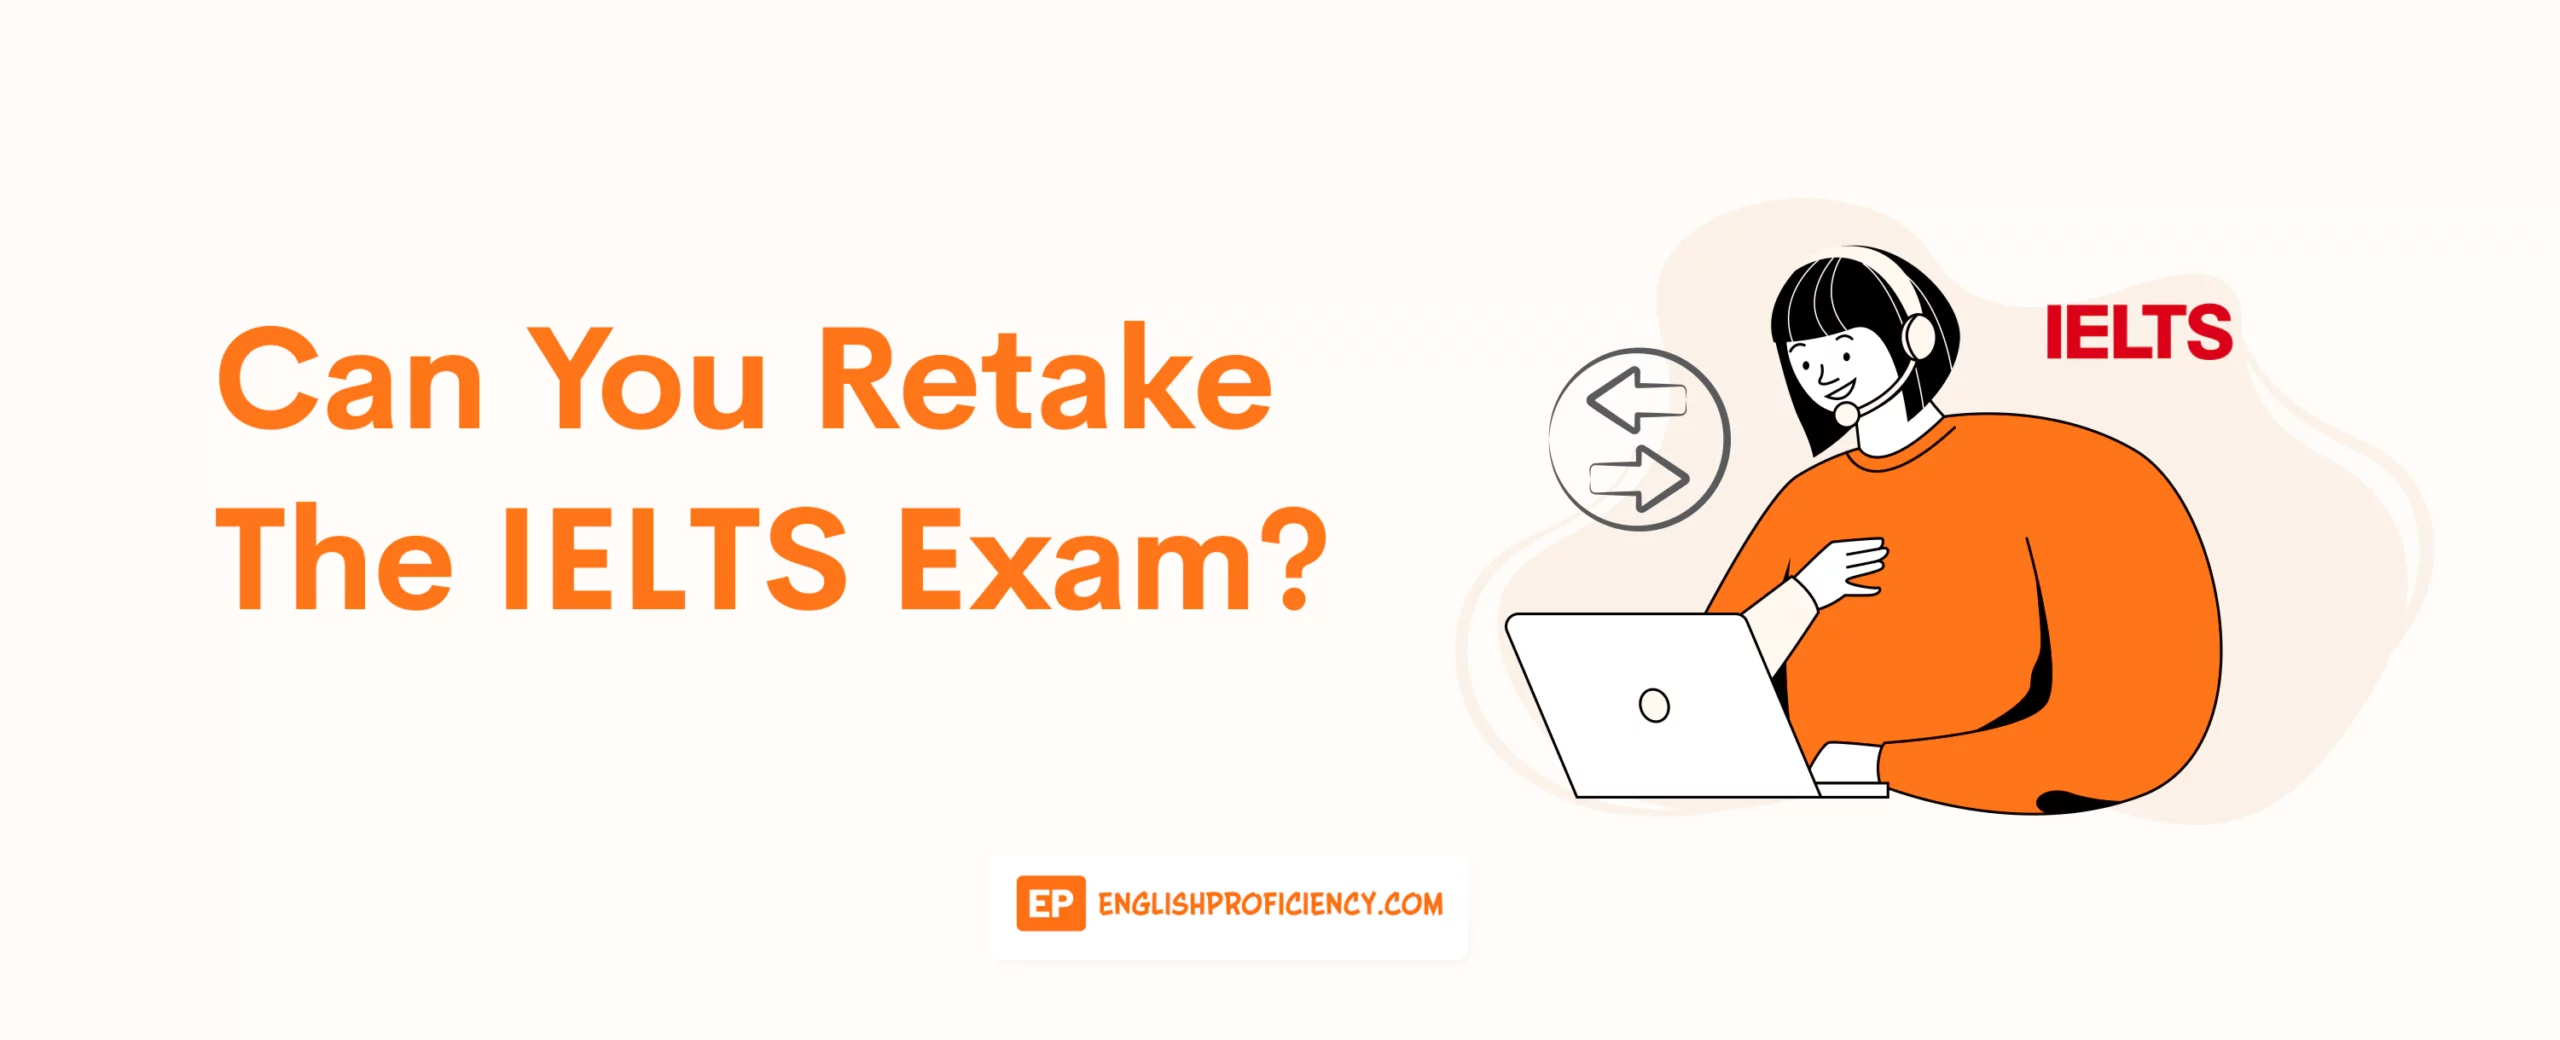 Can You Retake the IELTS Exam